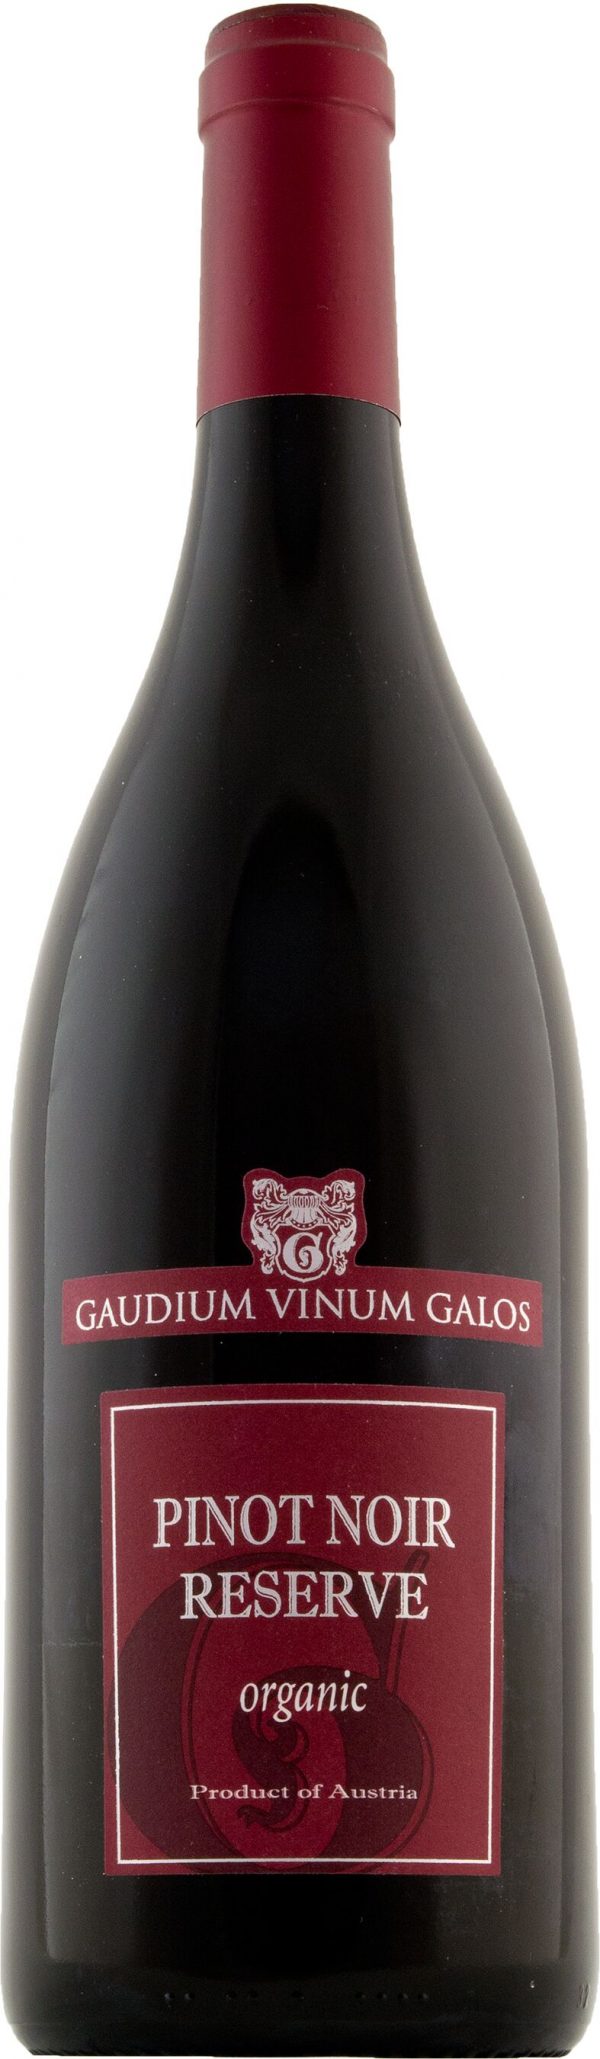 Gaudium Vinum Galos Pinot Noir Reserve Organic 75cl